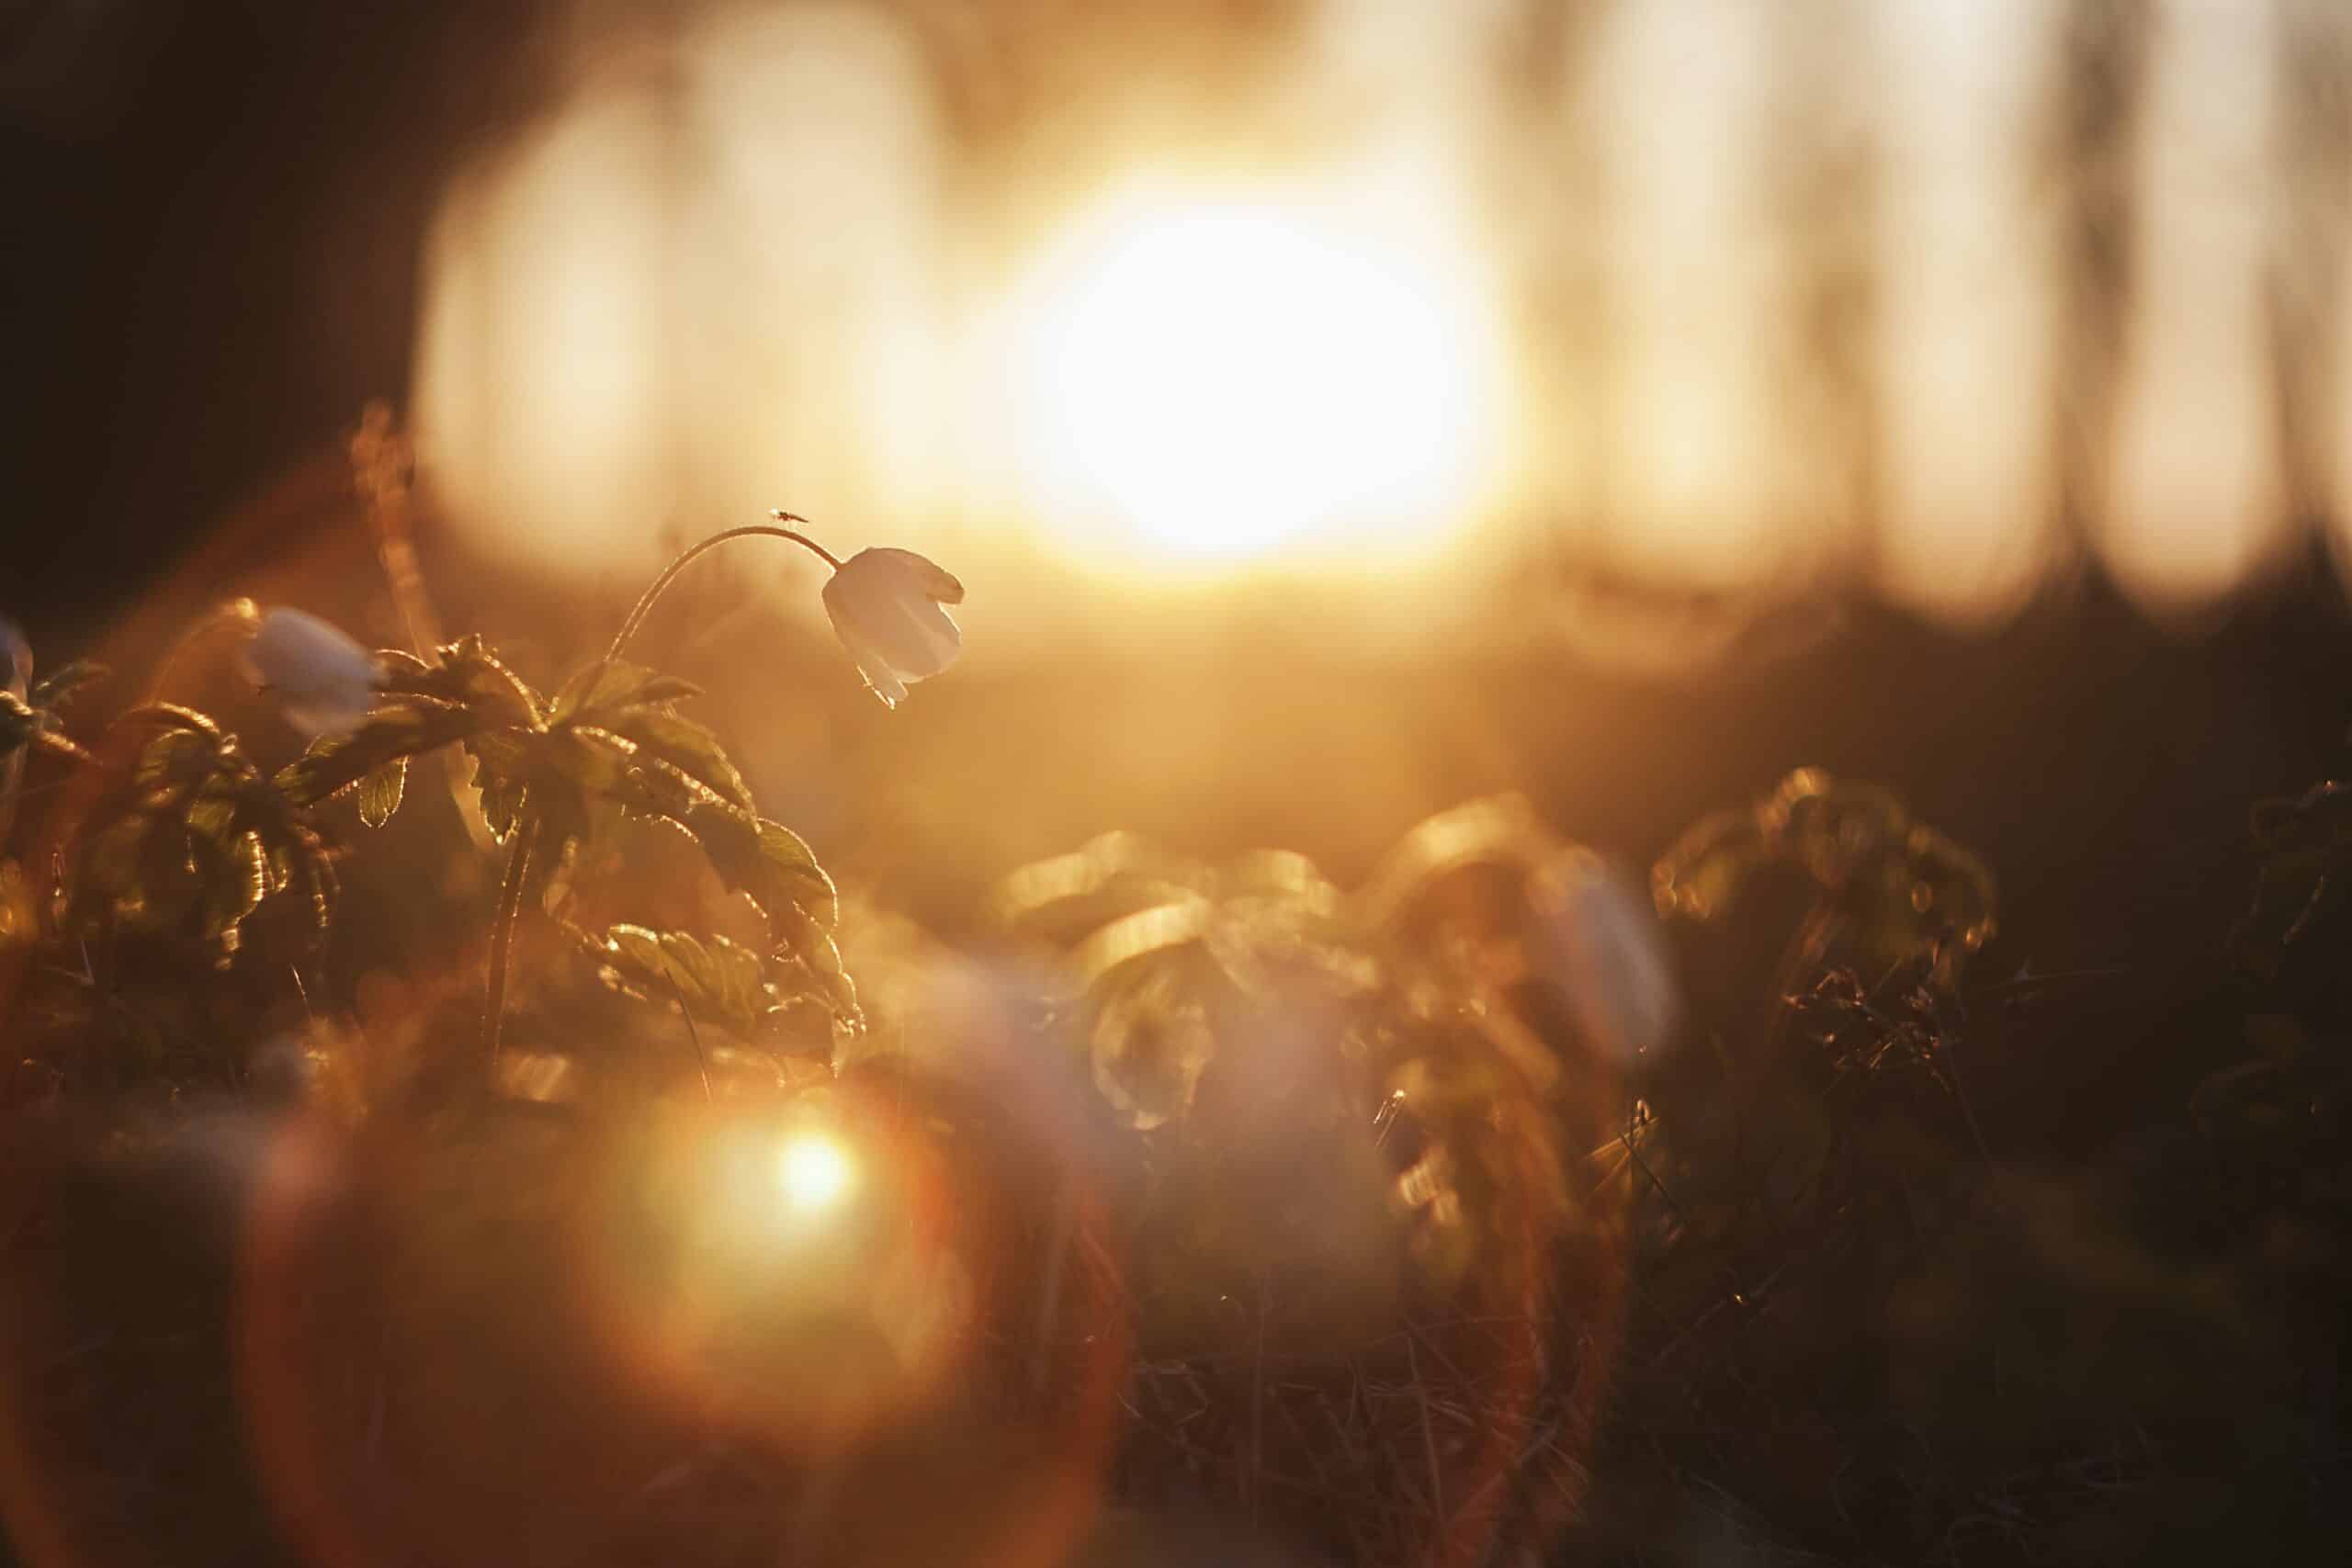 flower in the sun | Photo by Ilja Tulit on Unsplash